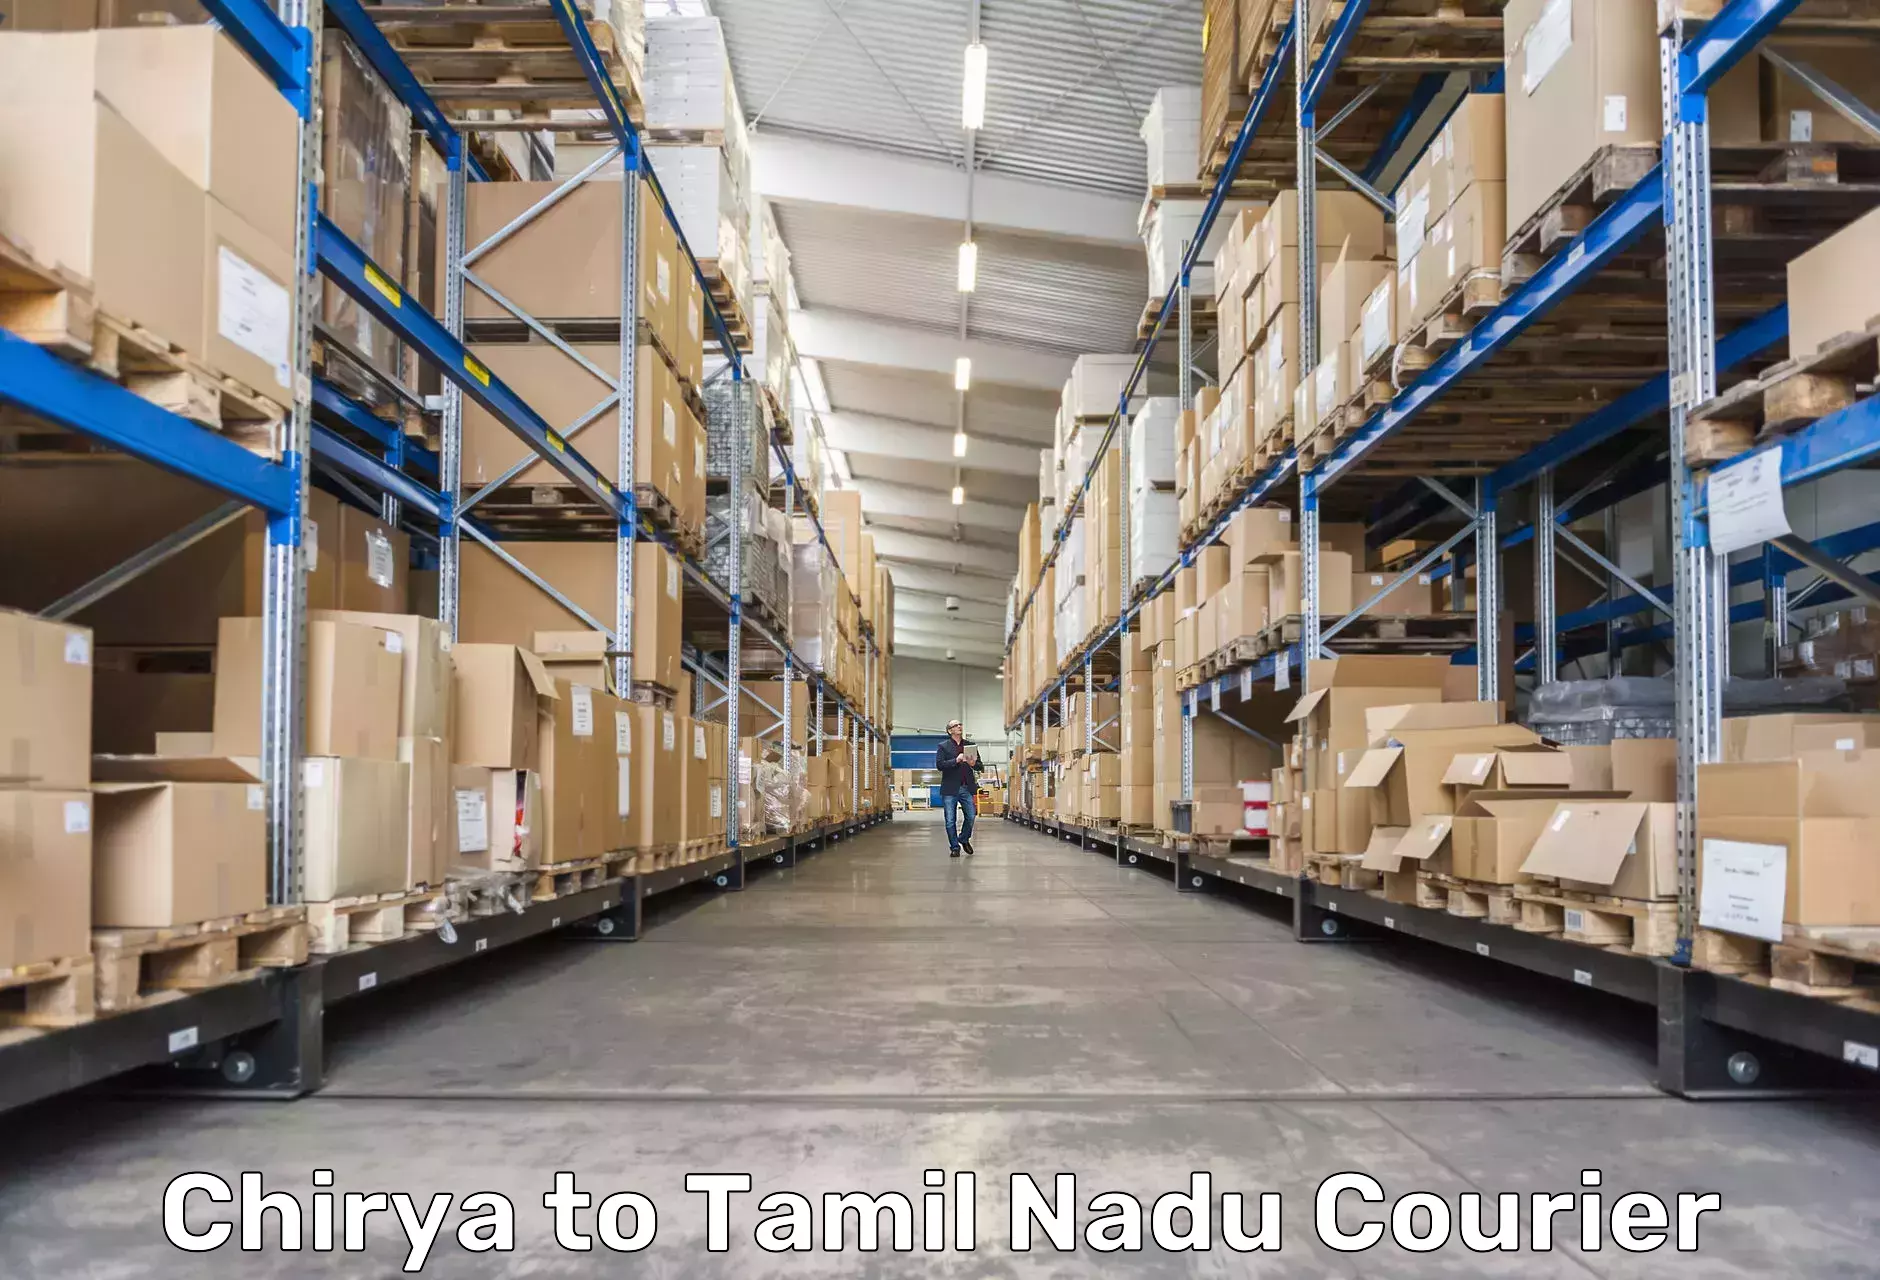 Efficient order fulfillment in Chirya to Tamil Nadu